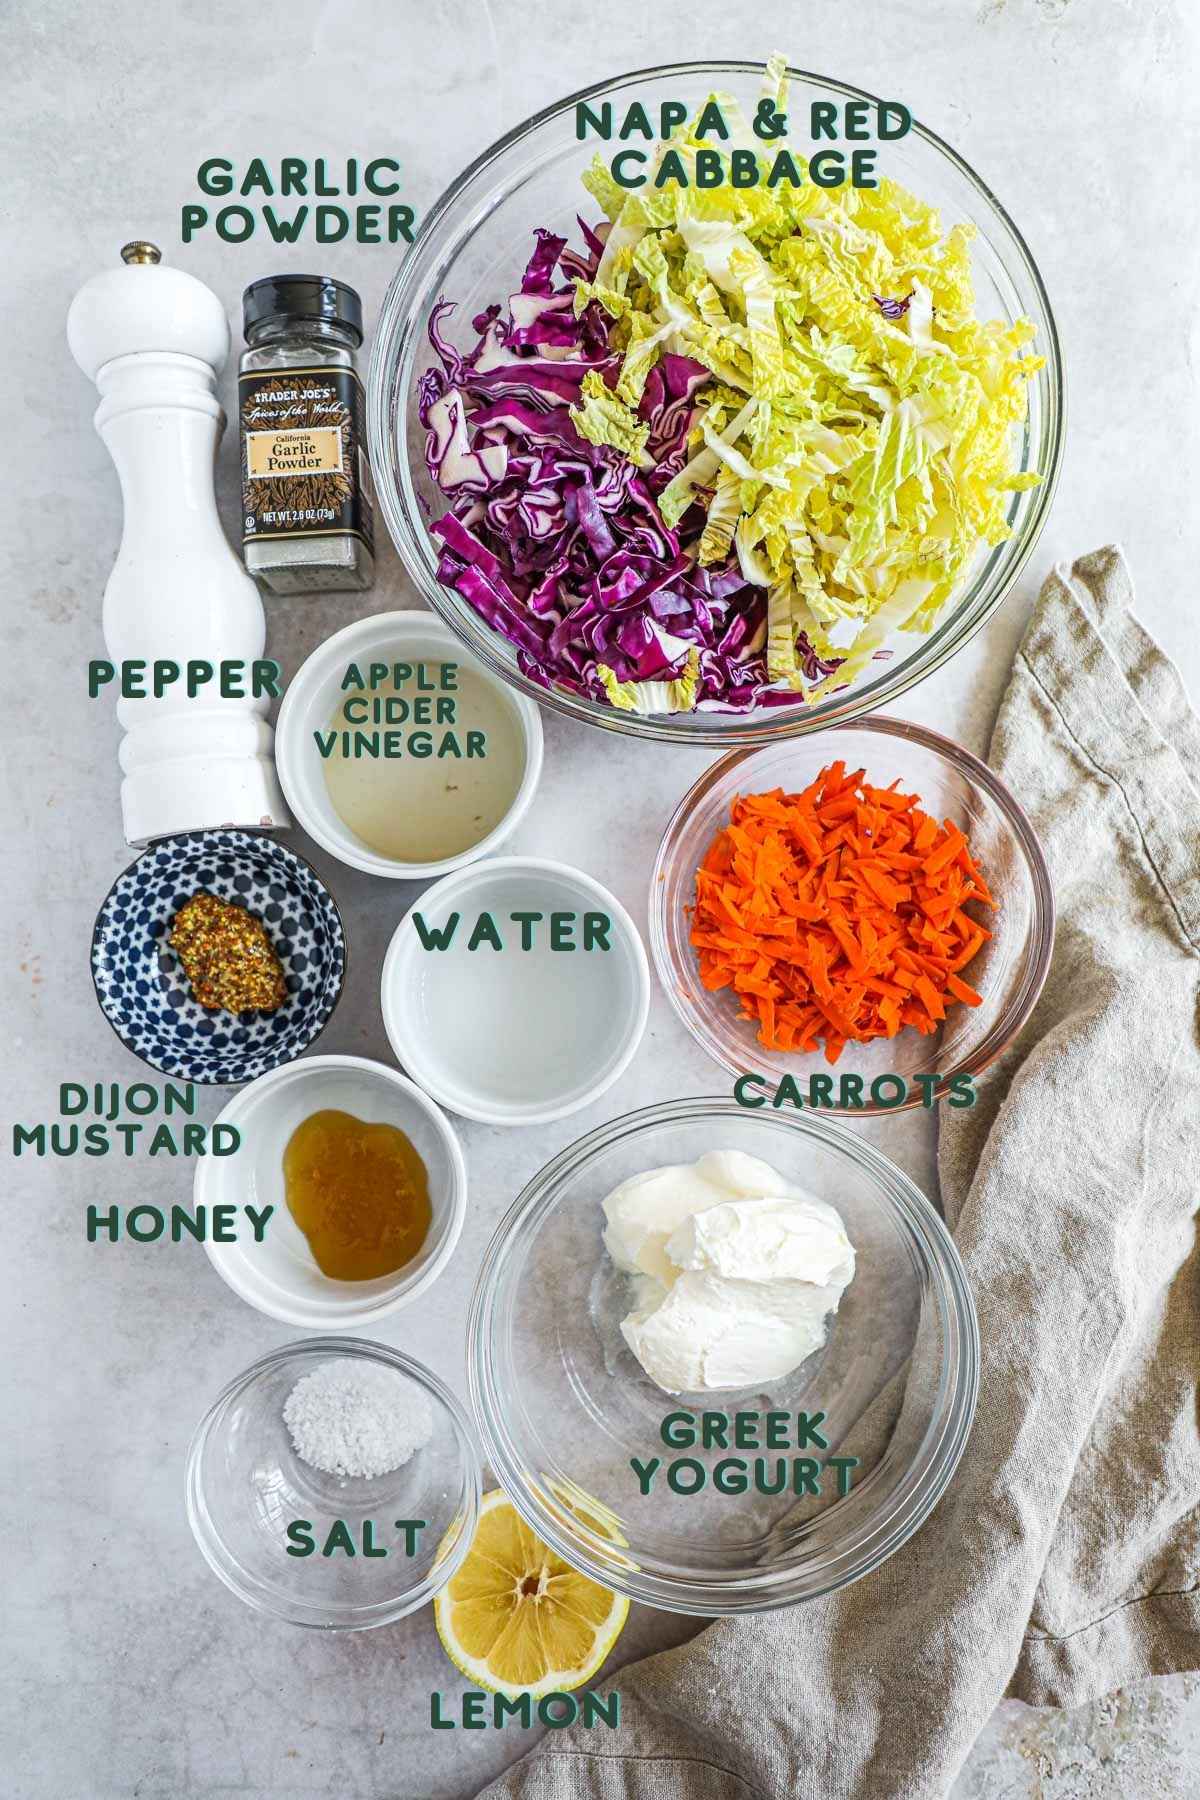 Ingredients to make a healthy Greek yogurt coleslaw recipe, including red cabbage, napa cabbage, carrots, Greek yogurt, honey, apple cider vinegar, water, garlic powder, dijon mustard, lemon juice, and kosher salt.